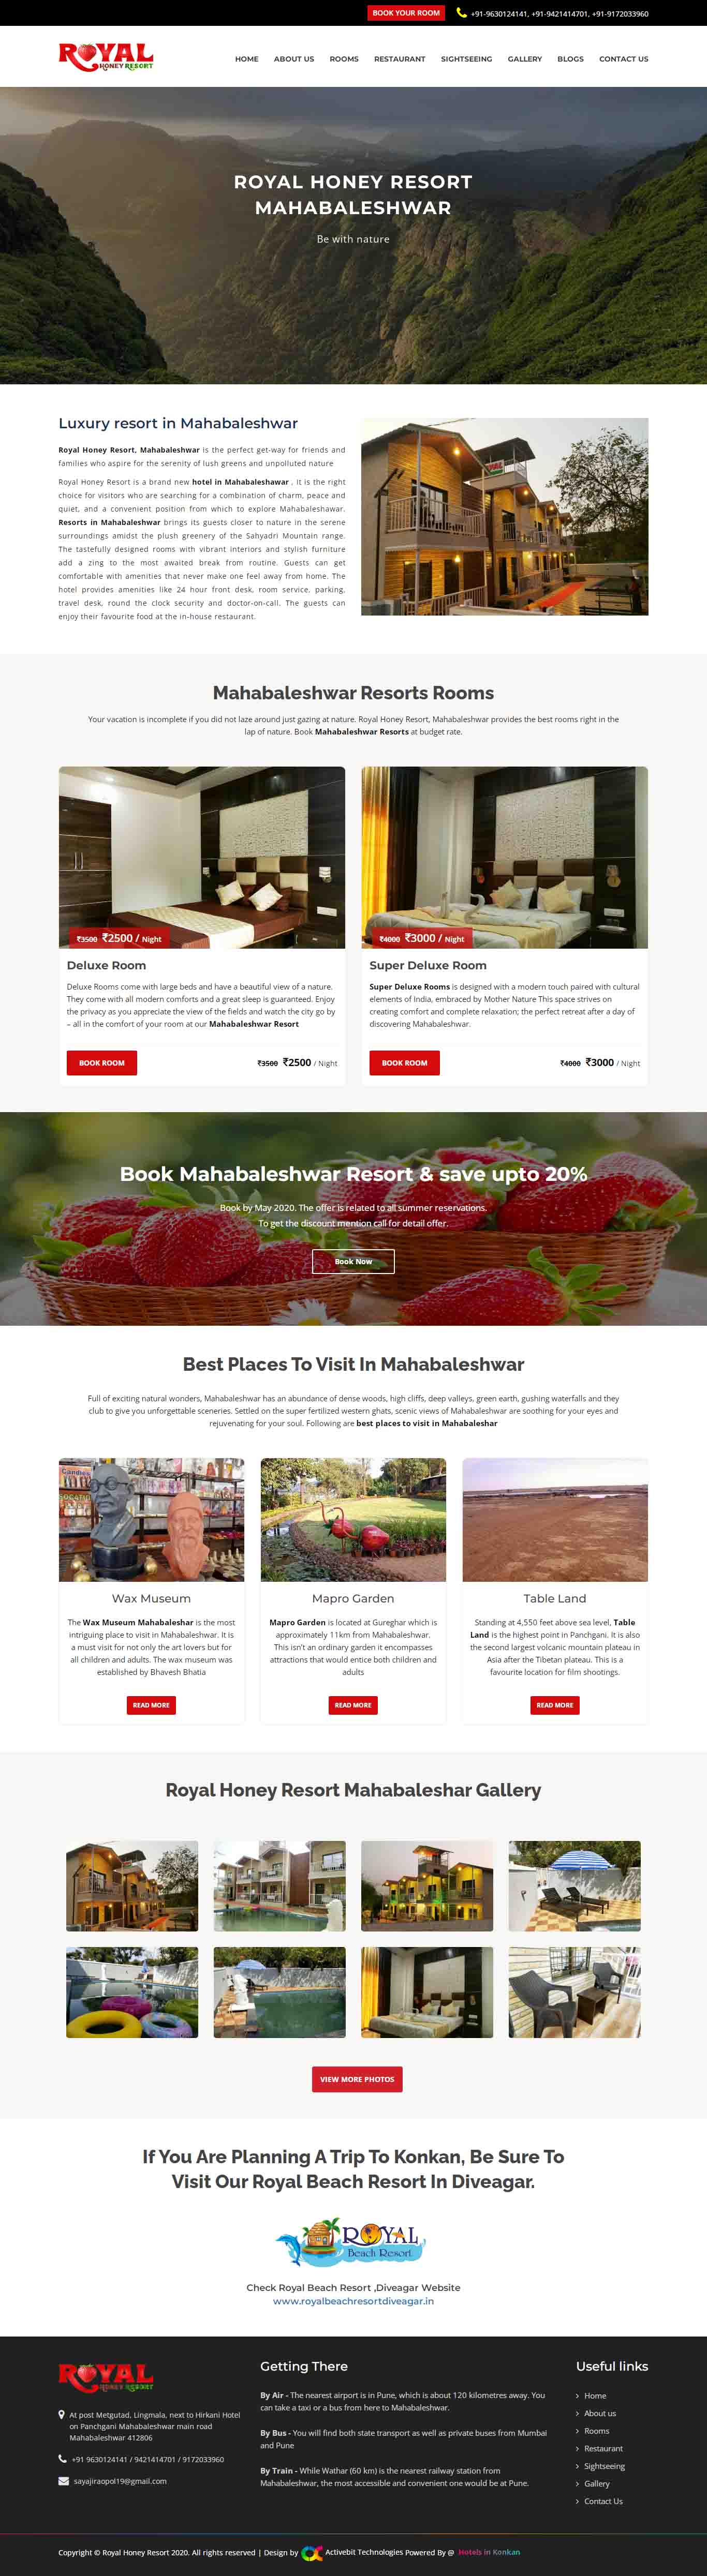 Royal Honey Resort website design